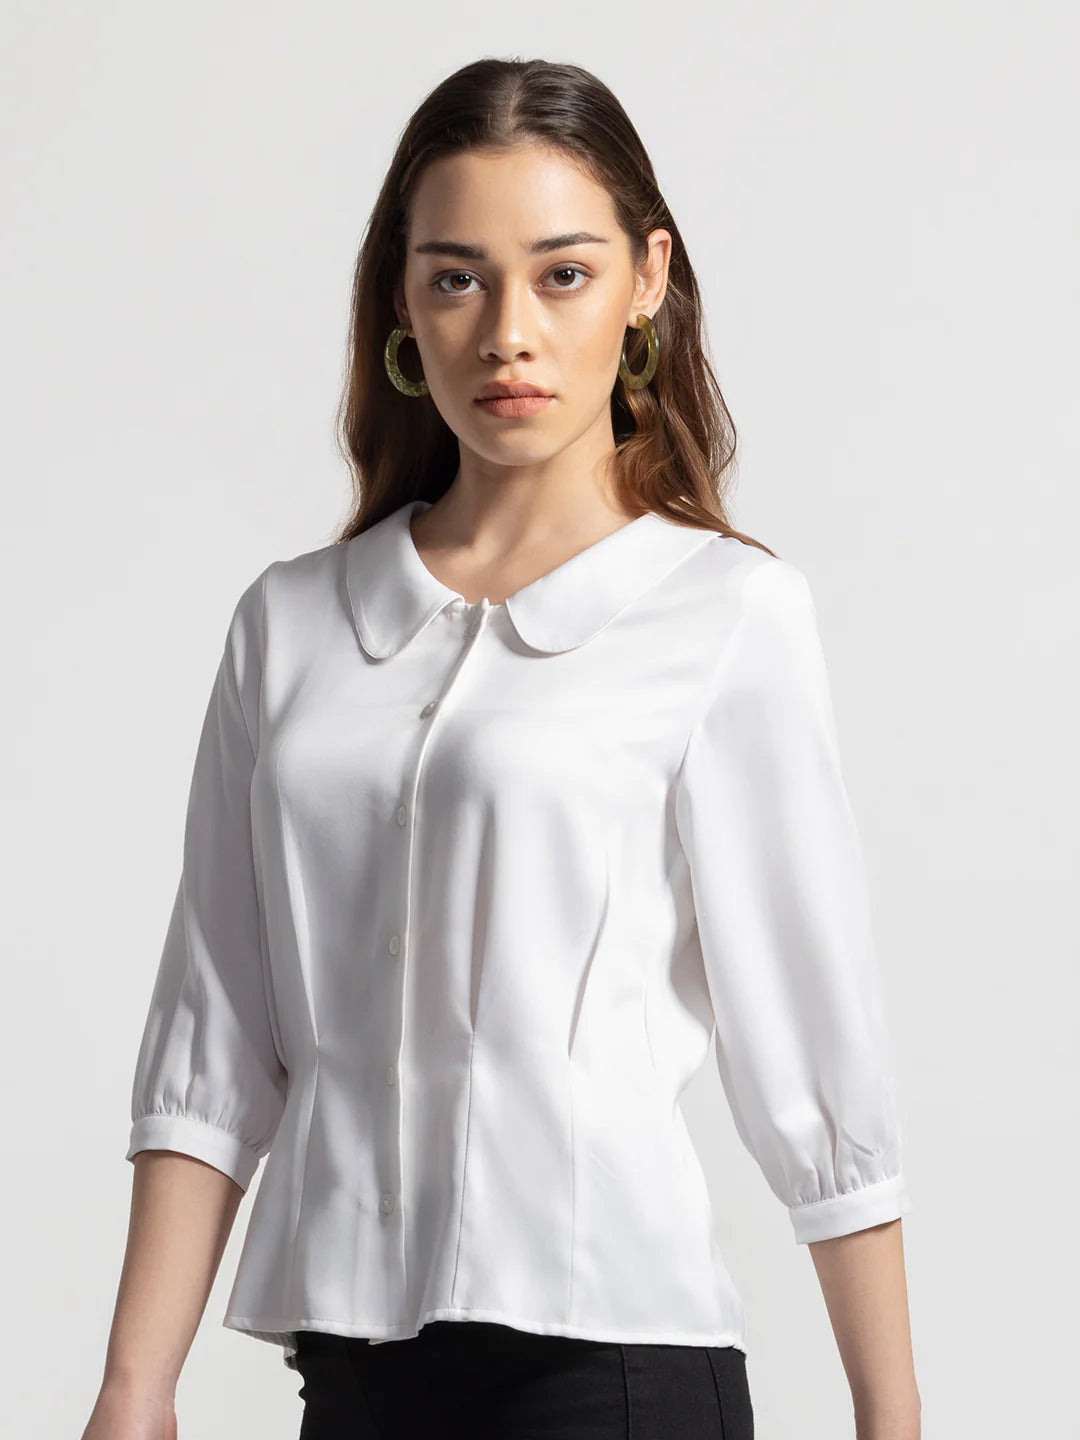 White Collar Shirt for Women | Classic White Peter Pan Collar Shirt